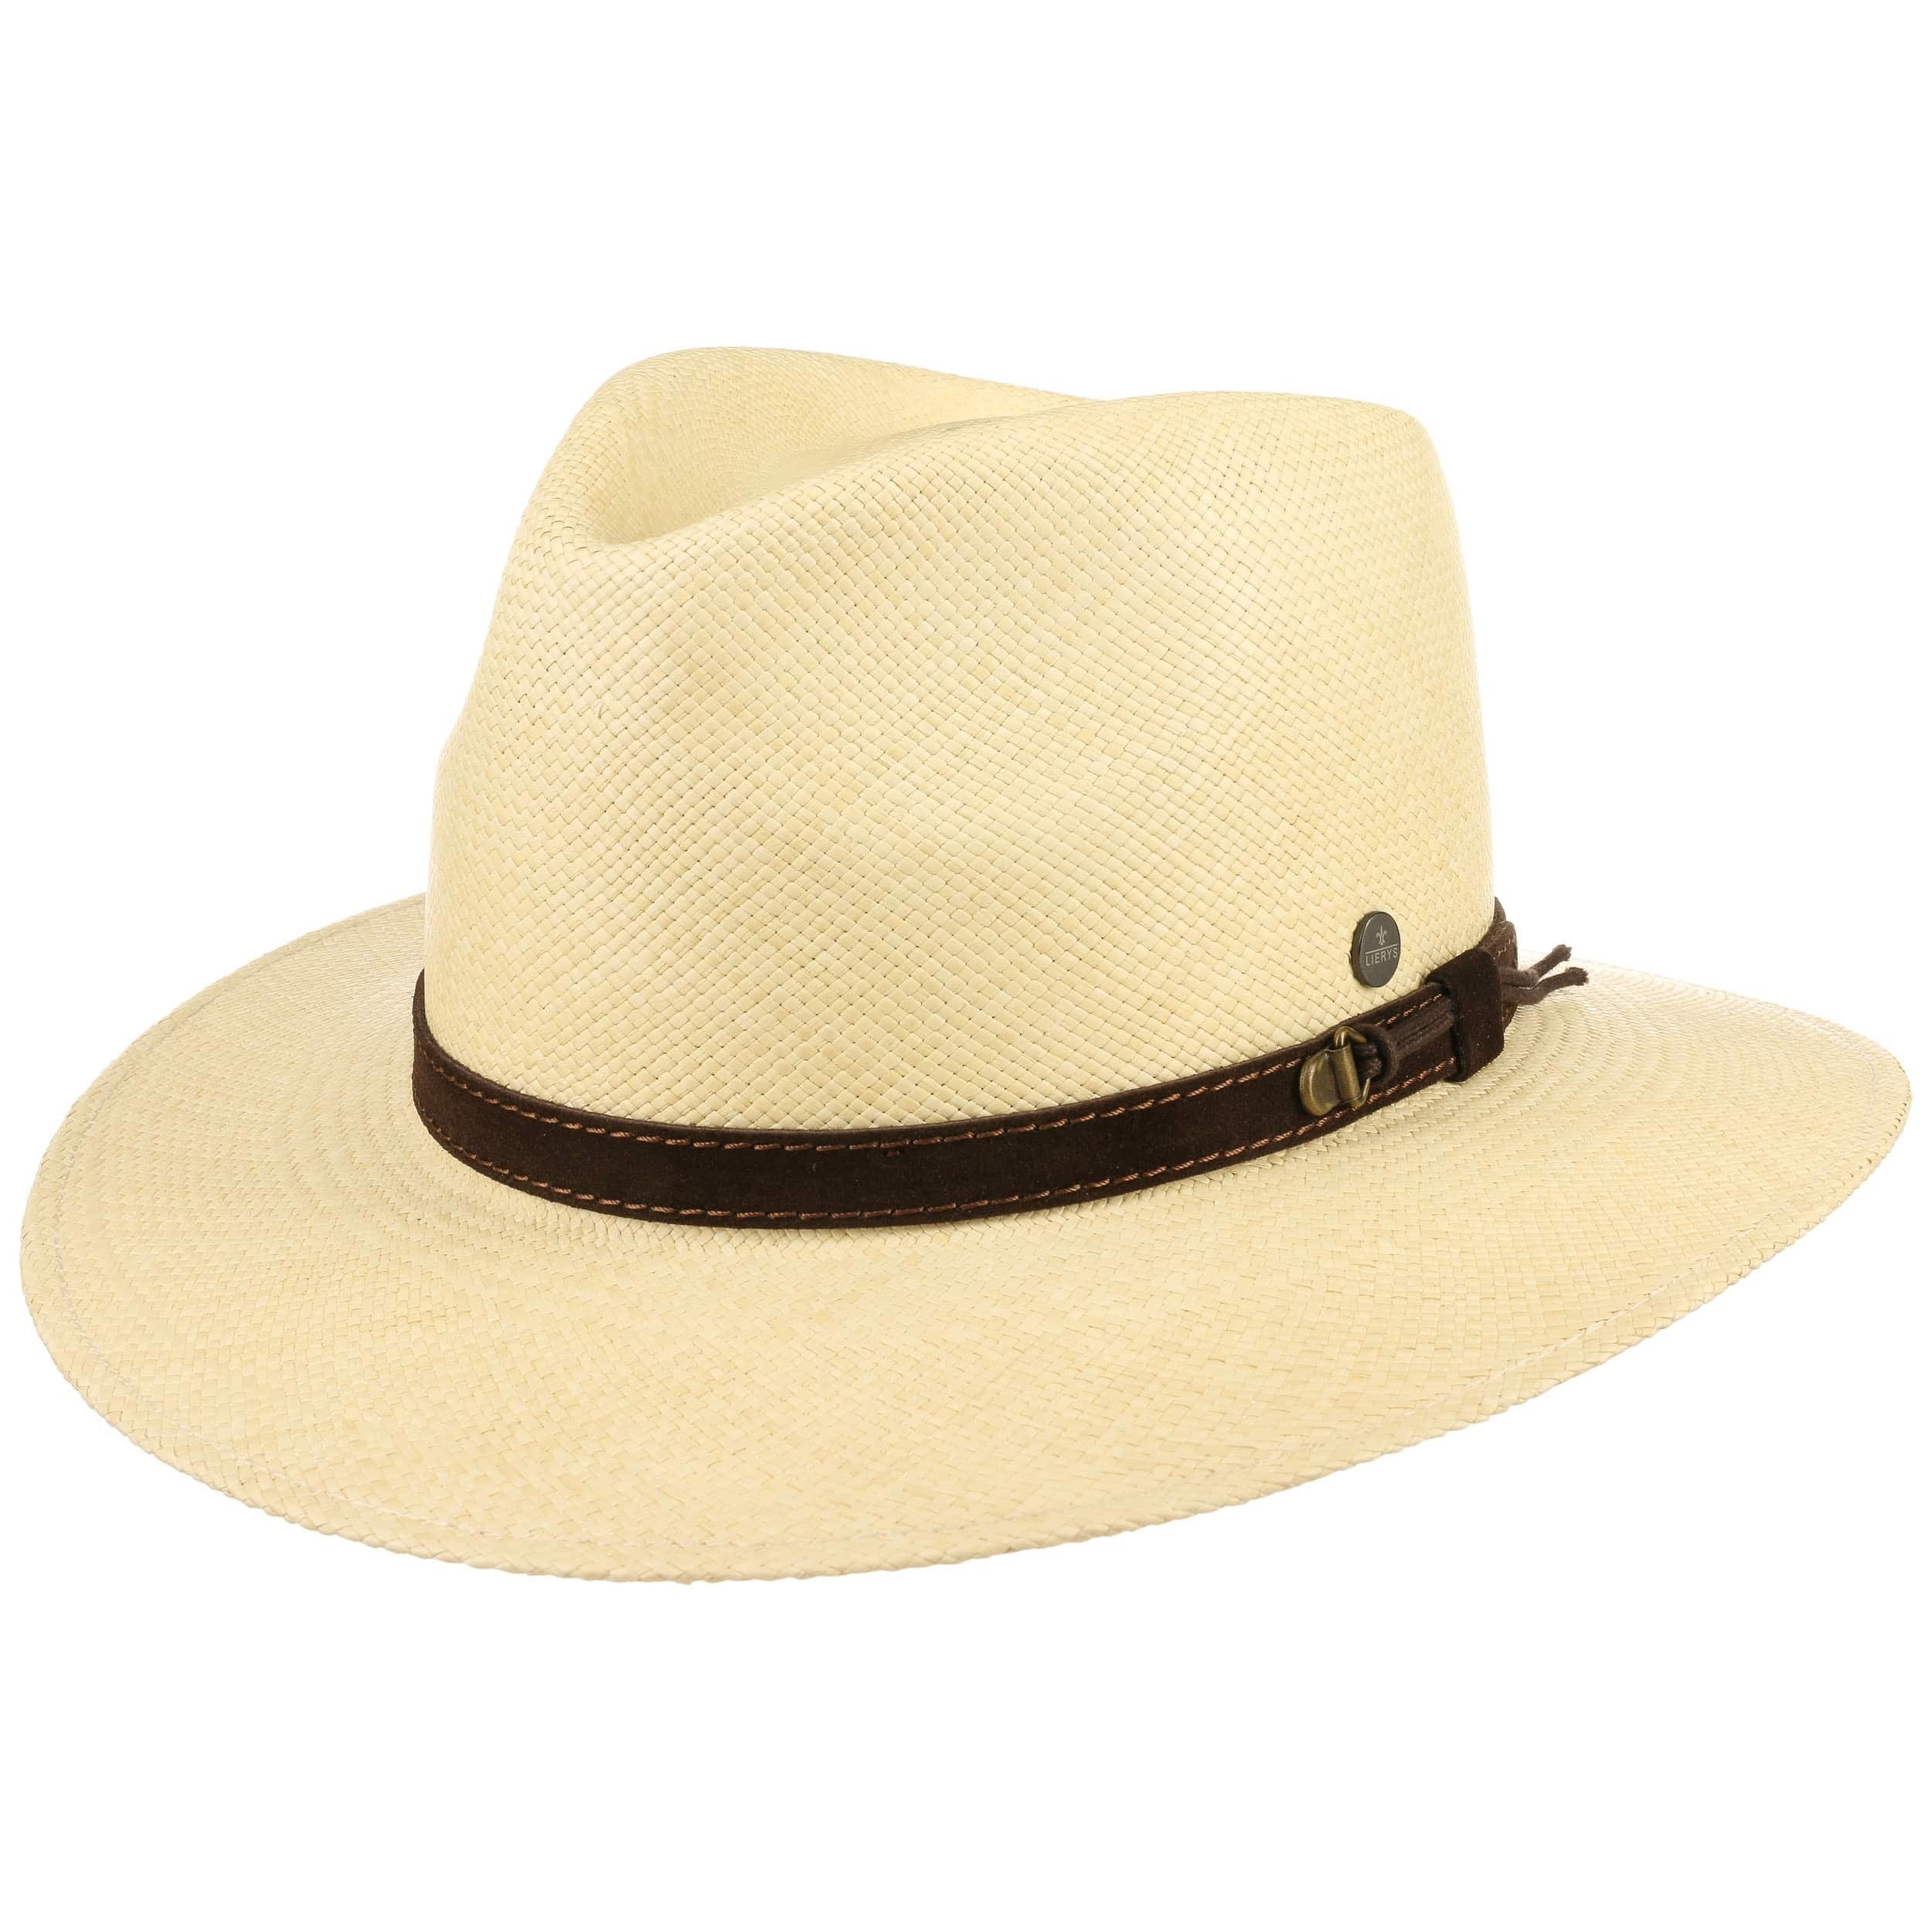 the striking panama hat